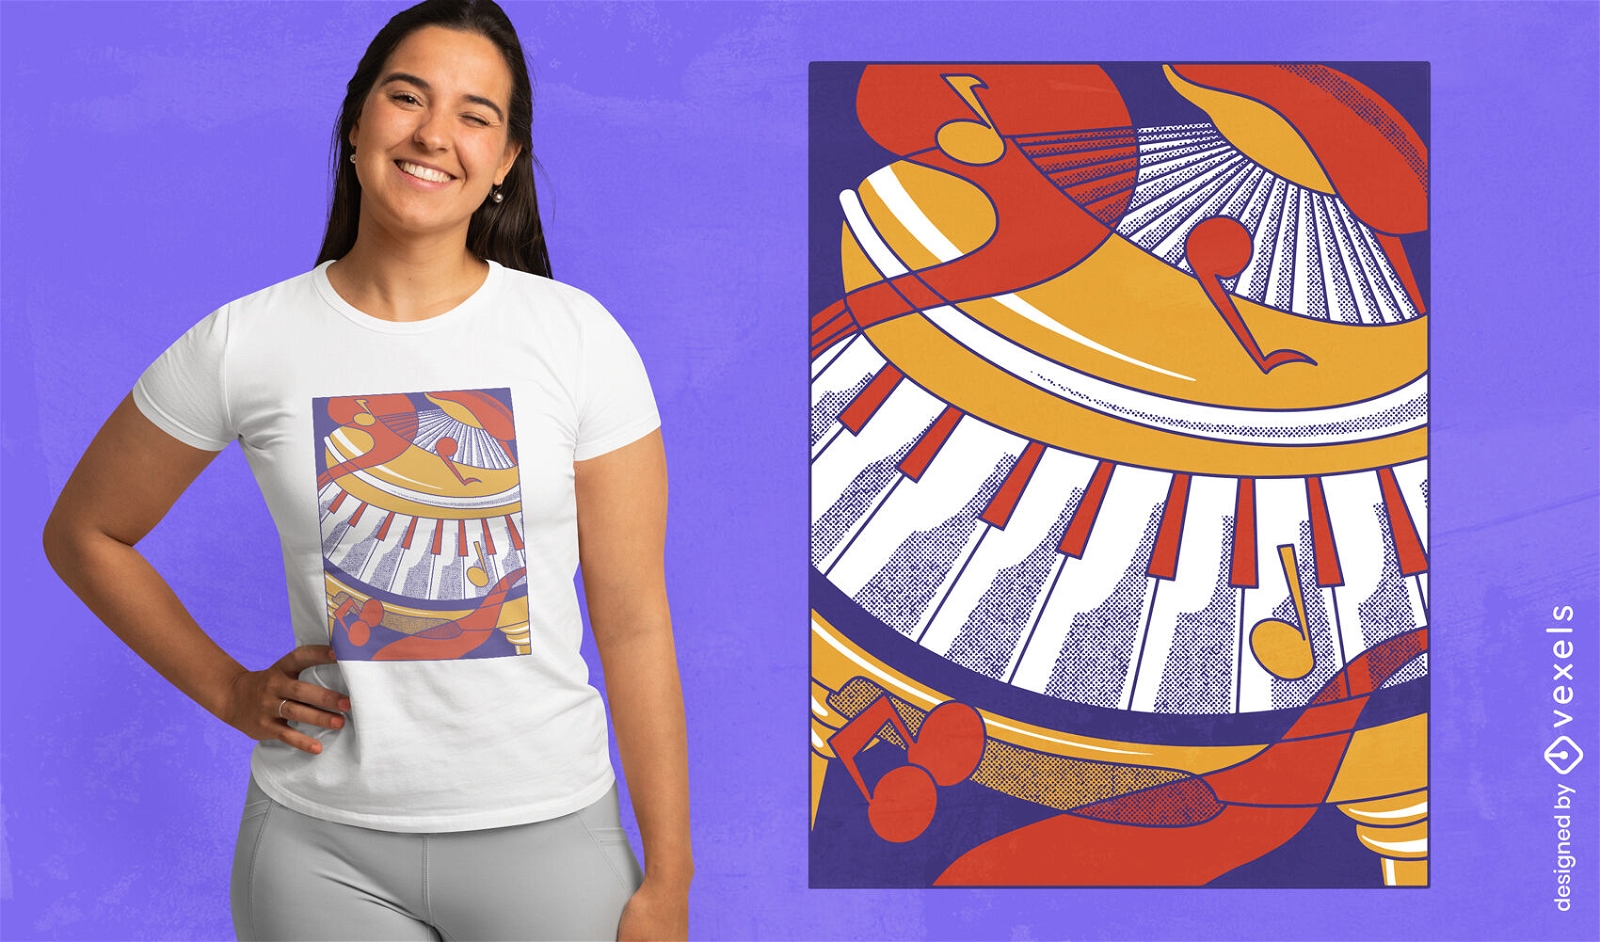 Piano abstract t-shirt design